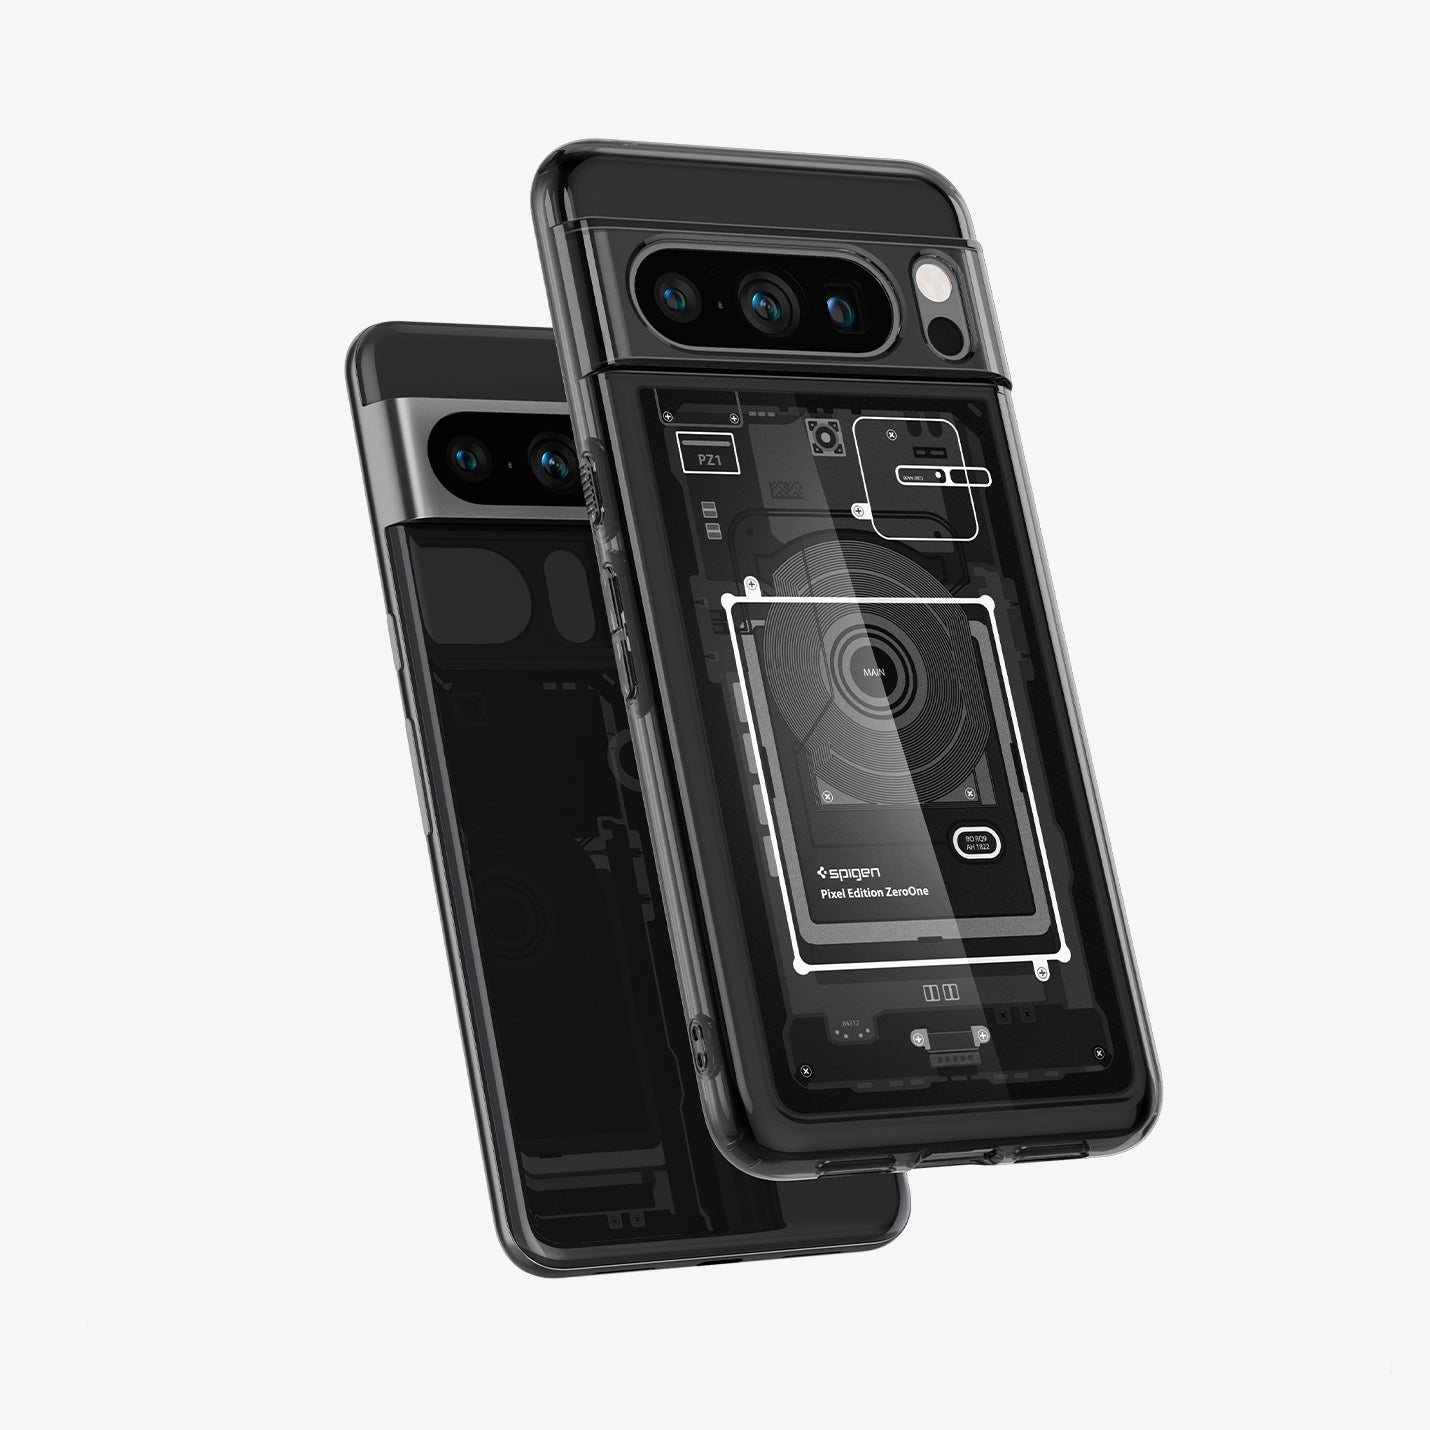 Spigen Ultra-Hybrid Zero One Case - For Google Pixel 8 Pro